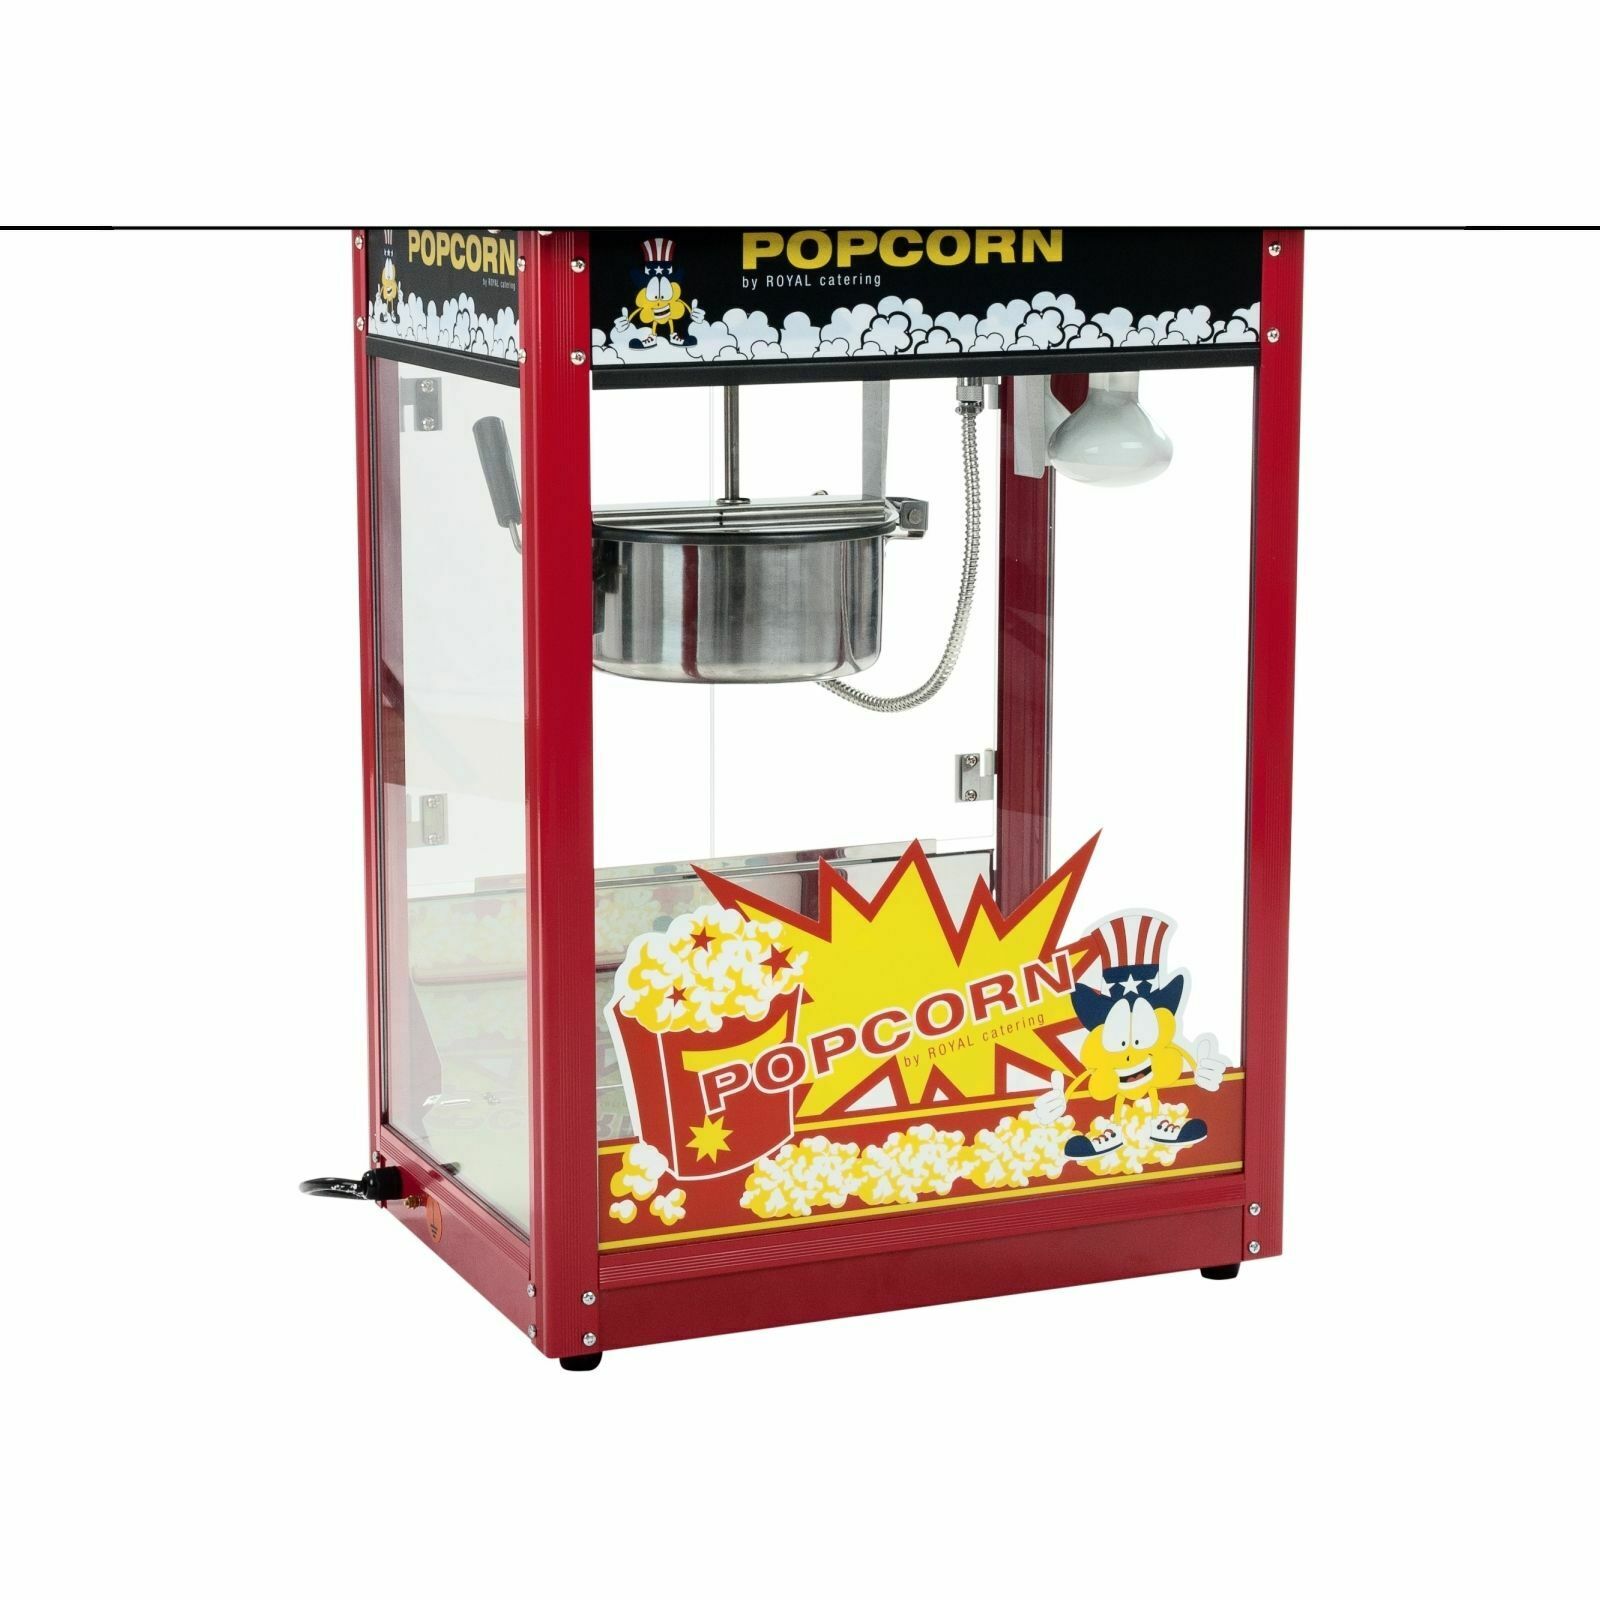 Automatic Stirring Popcorn Maker, 450W Electric Hot Oil Popcorn